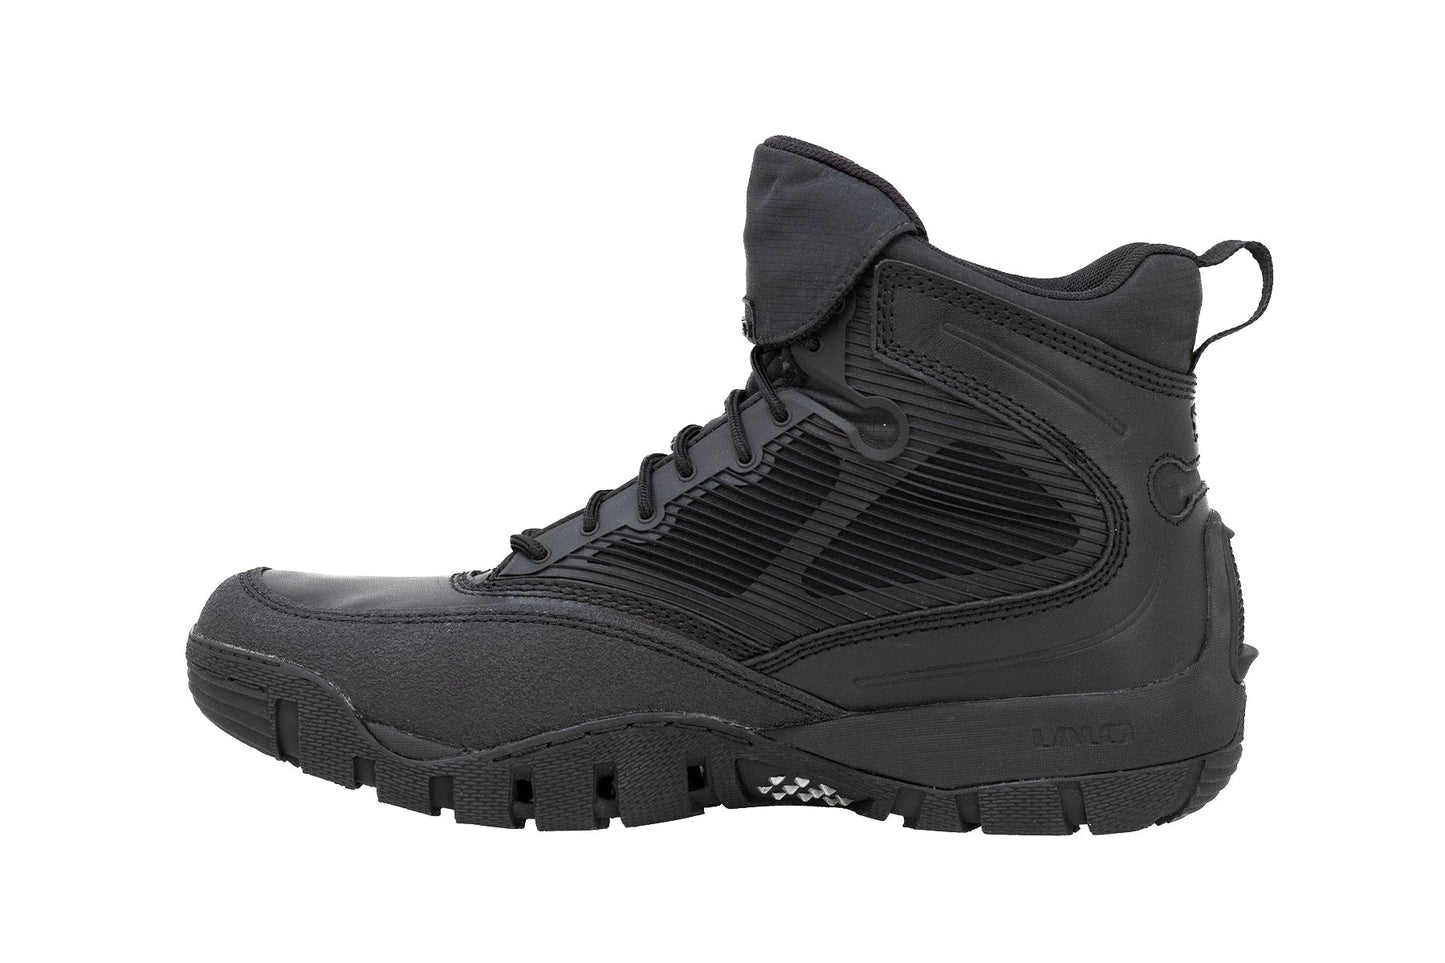 LALO SHADOW AMPHIBIAN 5" Boots Black - 1ML001